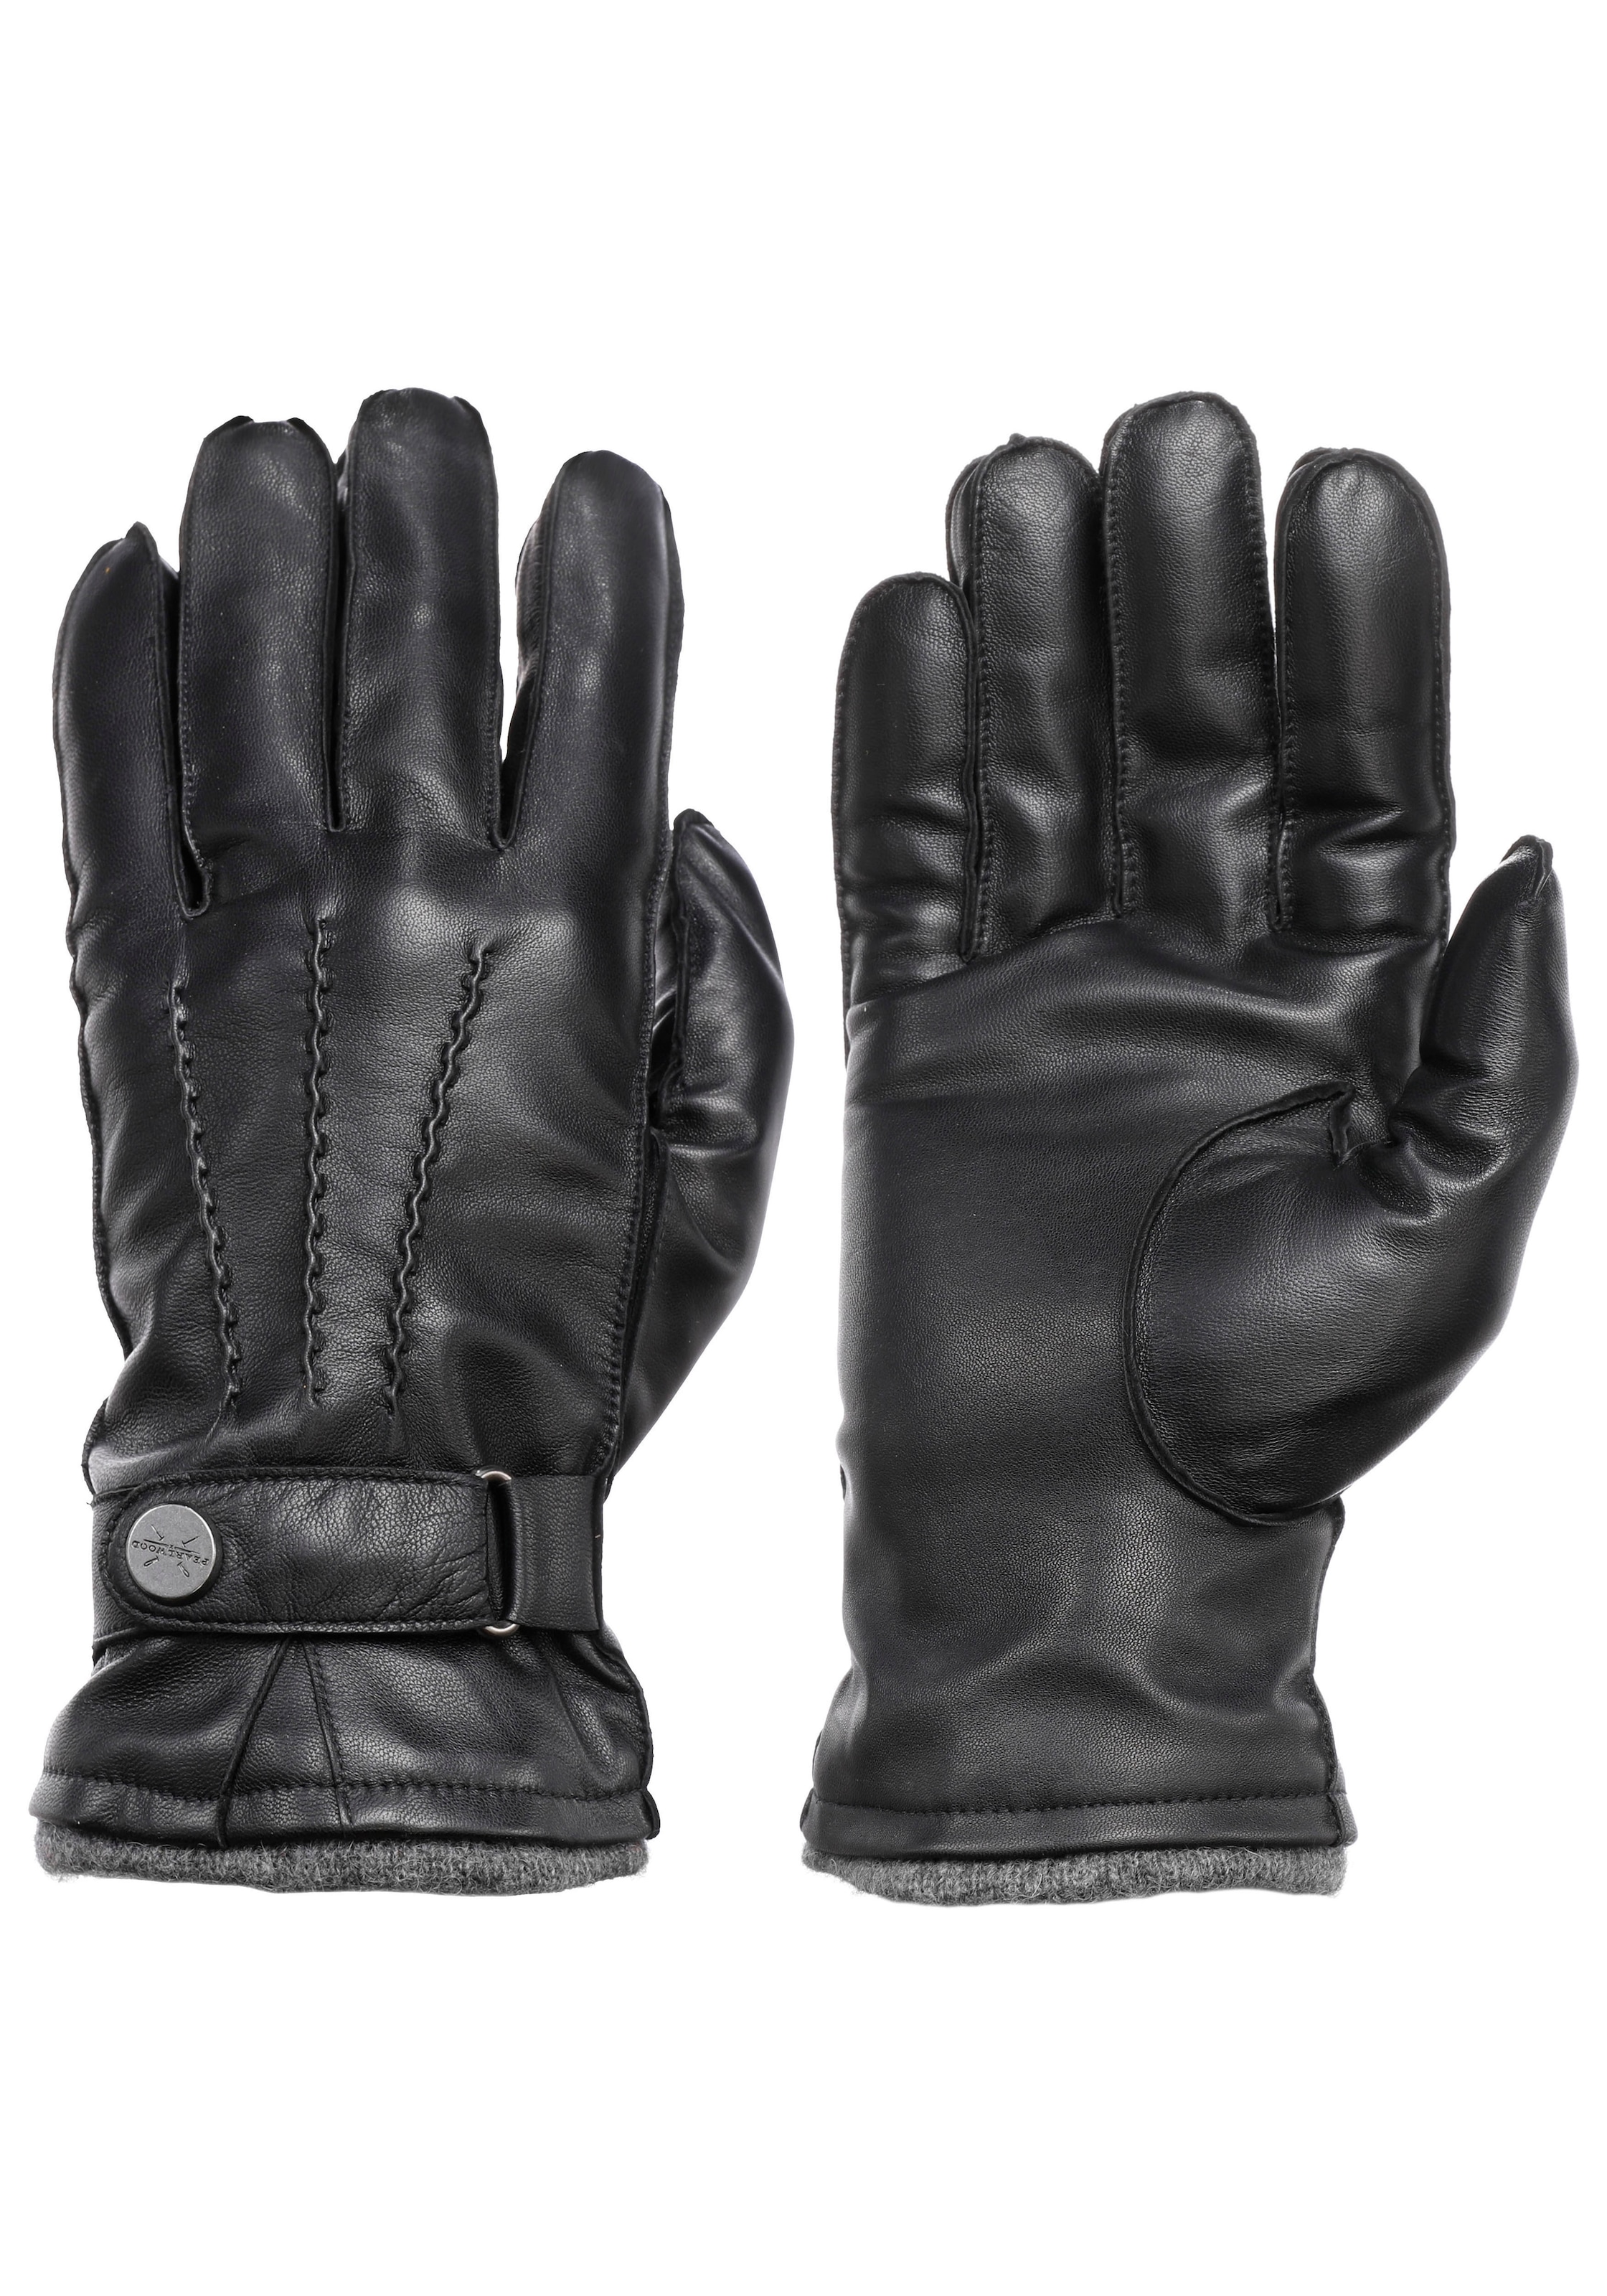 proofed Lederhandschuhe für 10 Finger | BAUR kaufen System PEARLWOOD »Mike«, - Touchscreen